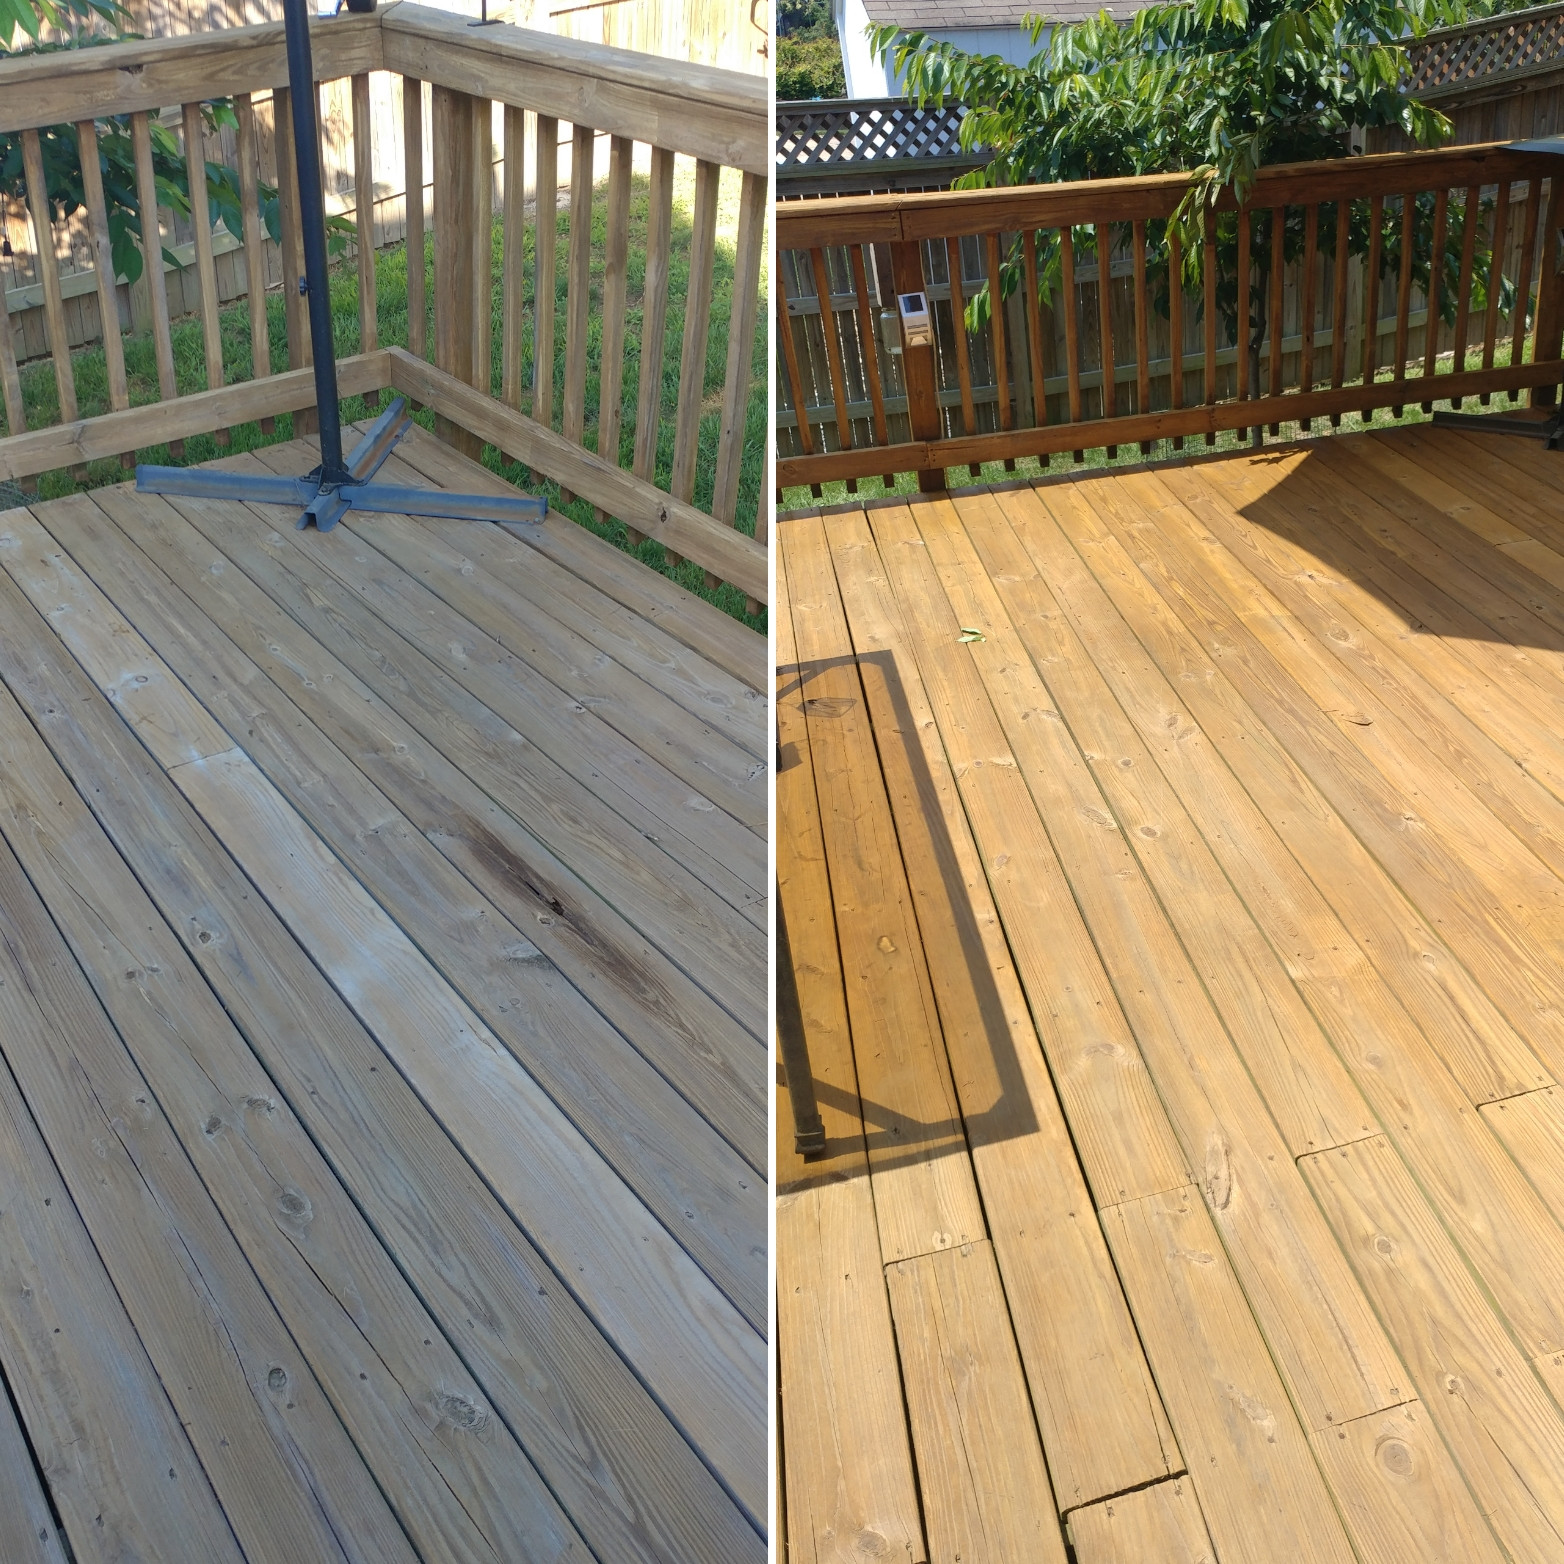 Wood Deck Paint Colors
 Restore A Deck Wood Stain Review